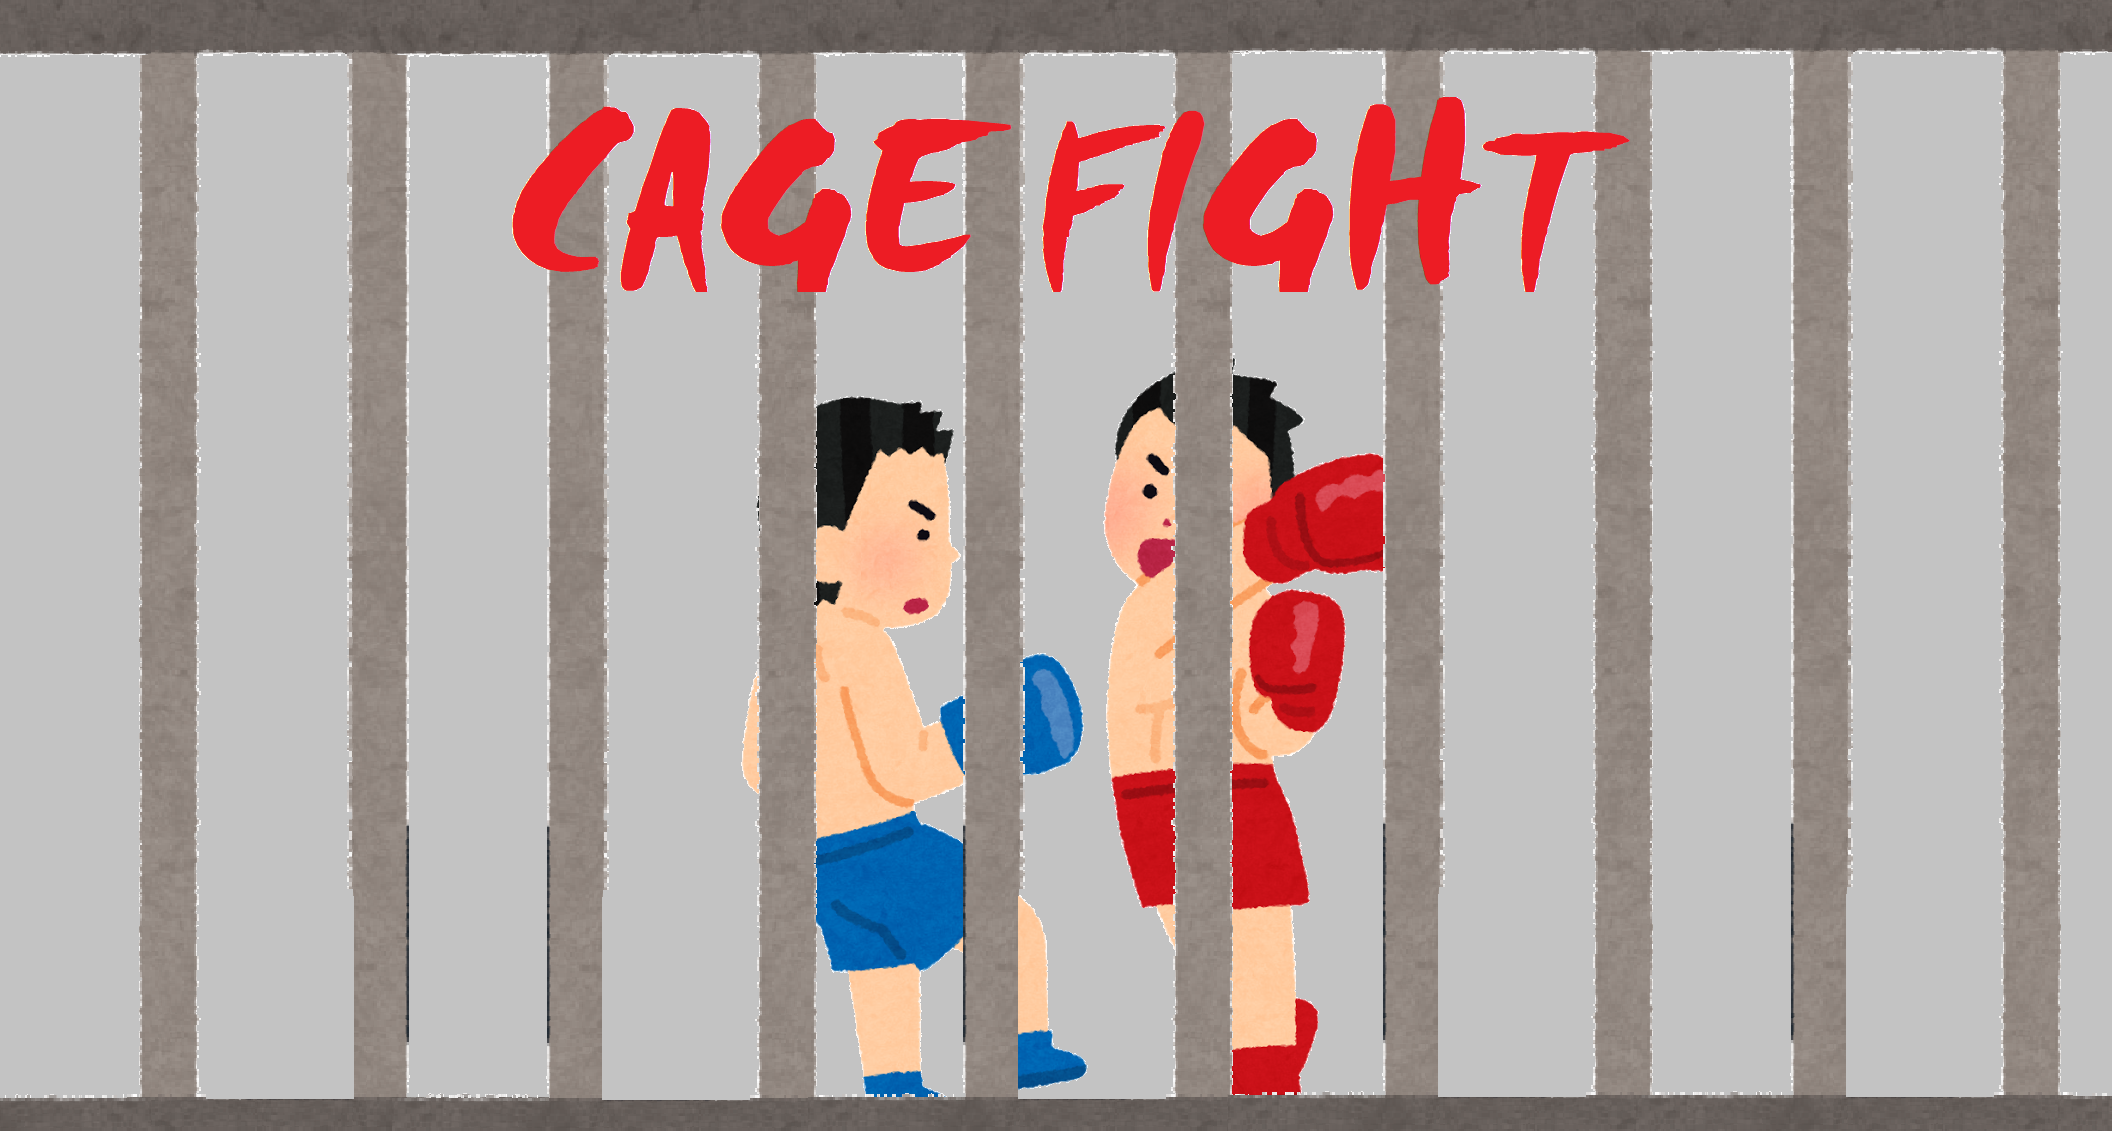 「CAGE FIGHT」のイメージ